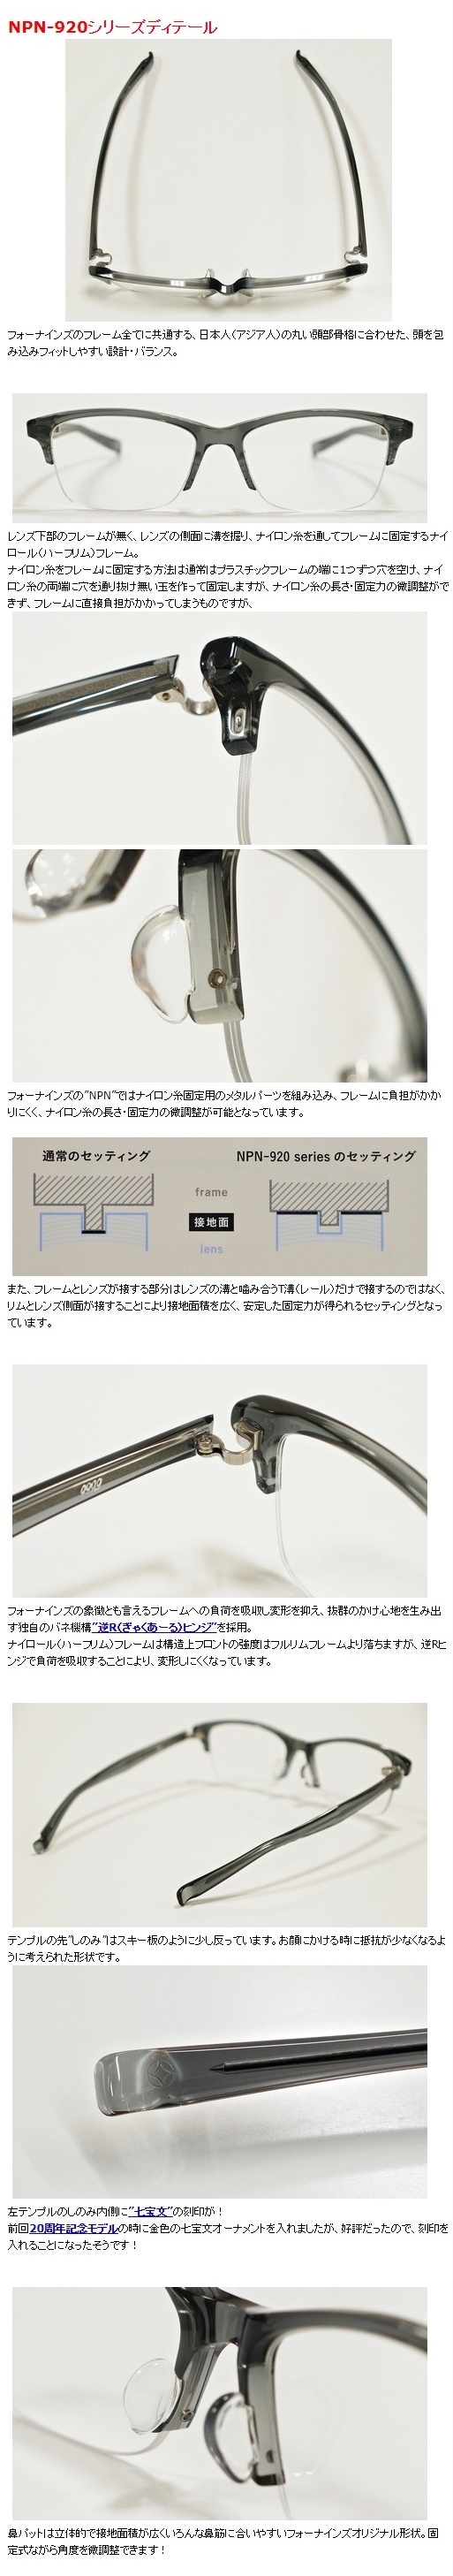 999.9”NPN-920シリーズ”】 | 999.9 selected by HAYASHI-MEGANE BLOG(2)